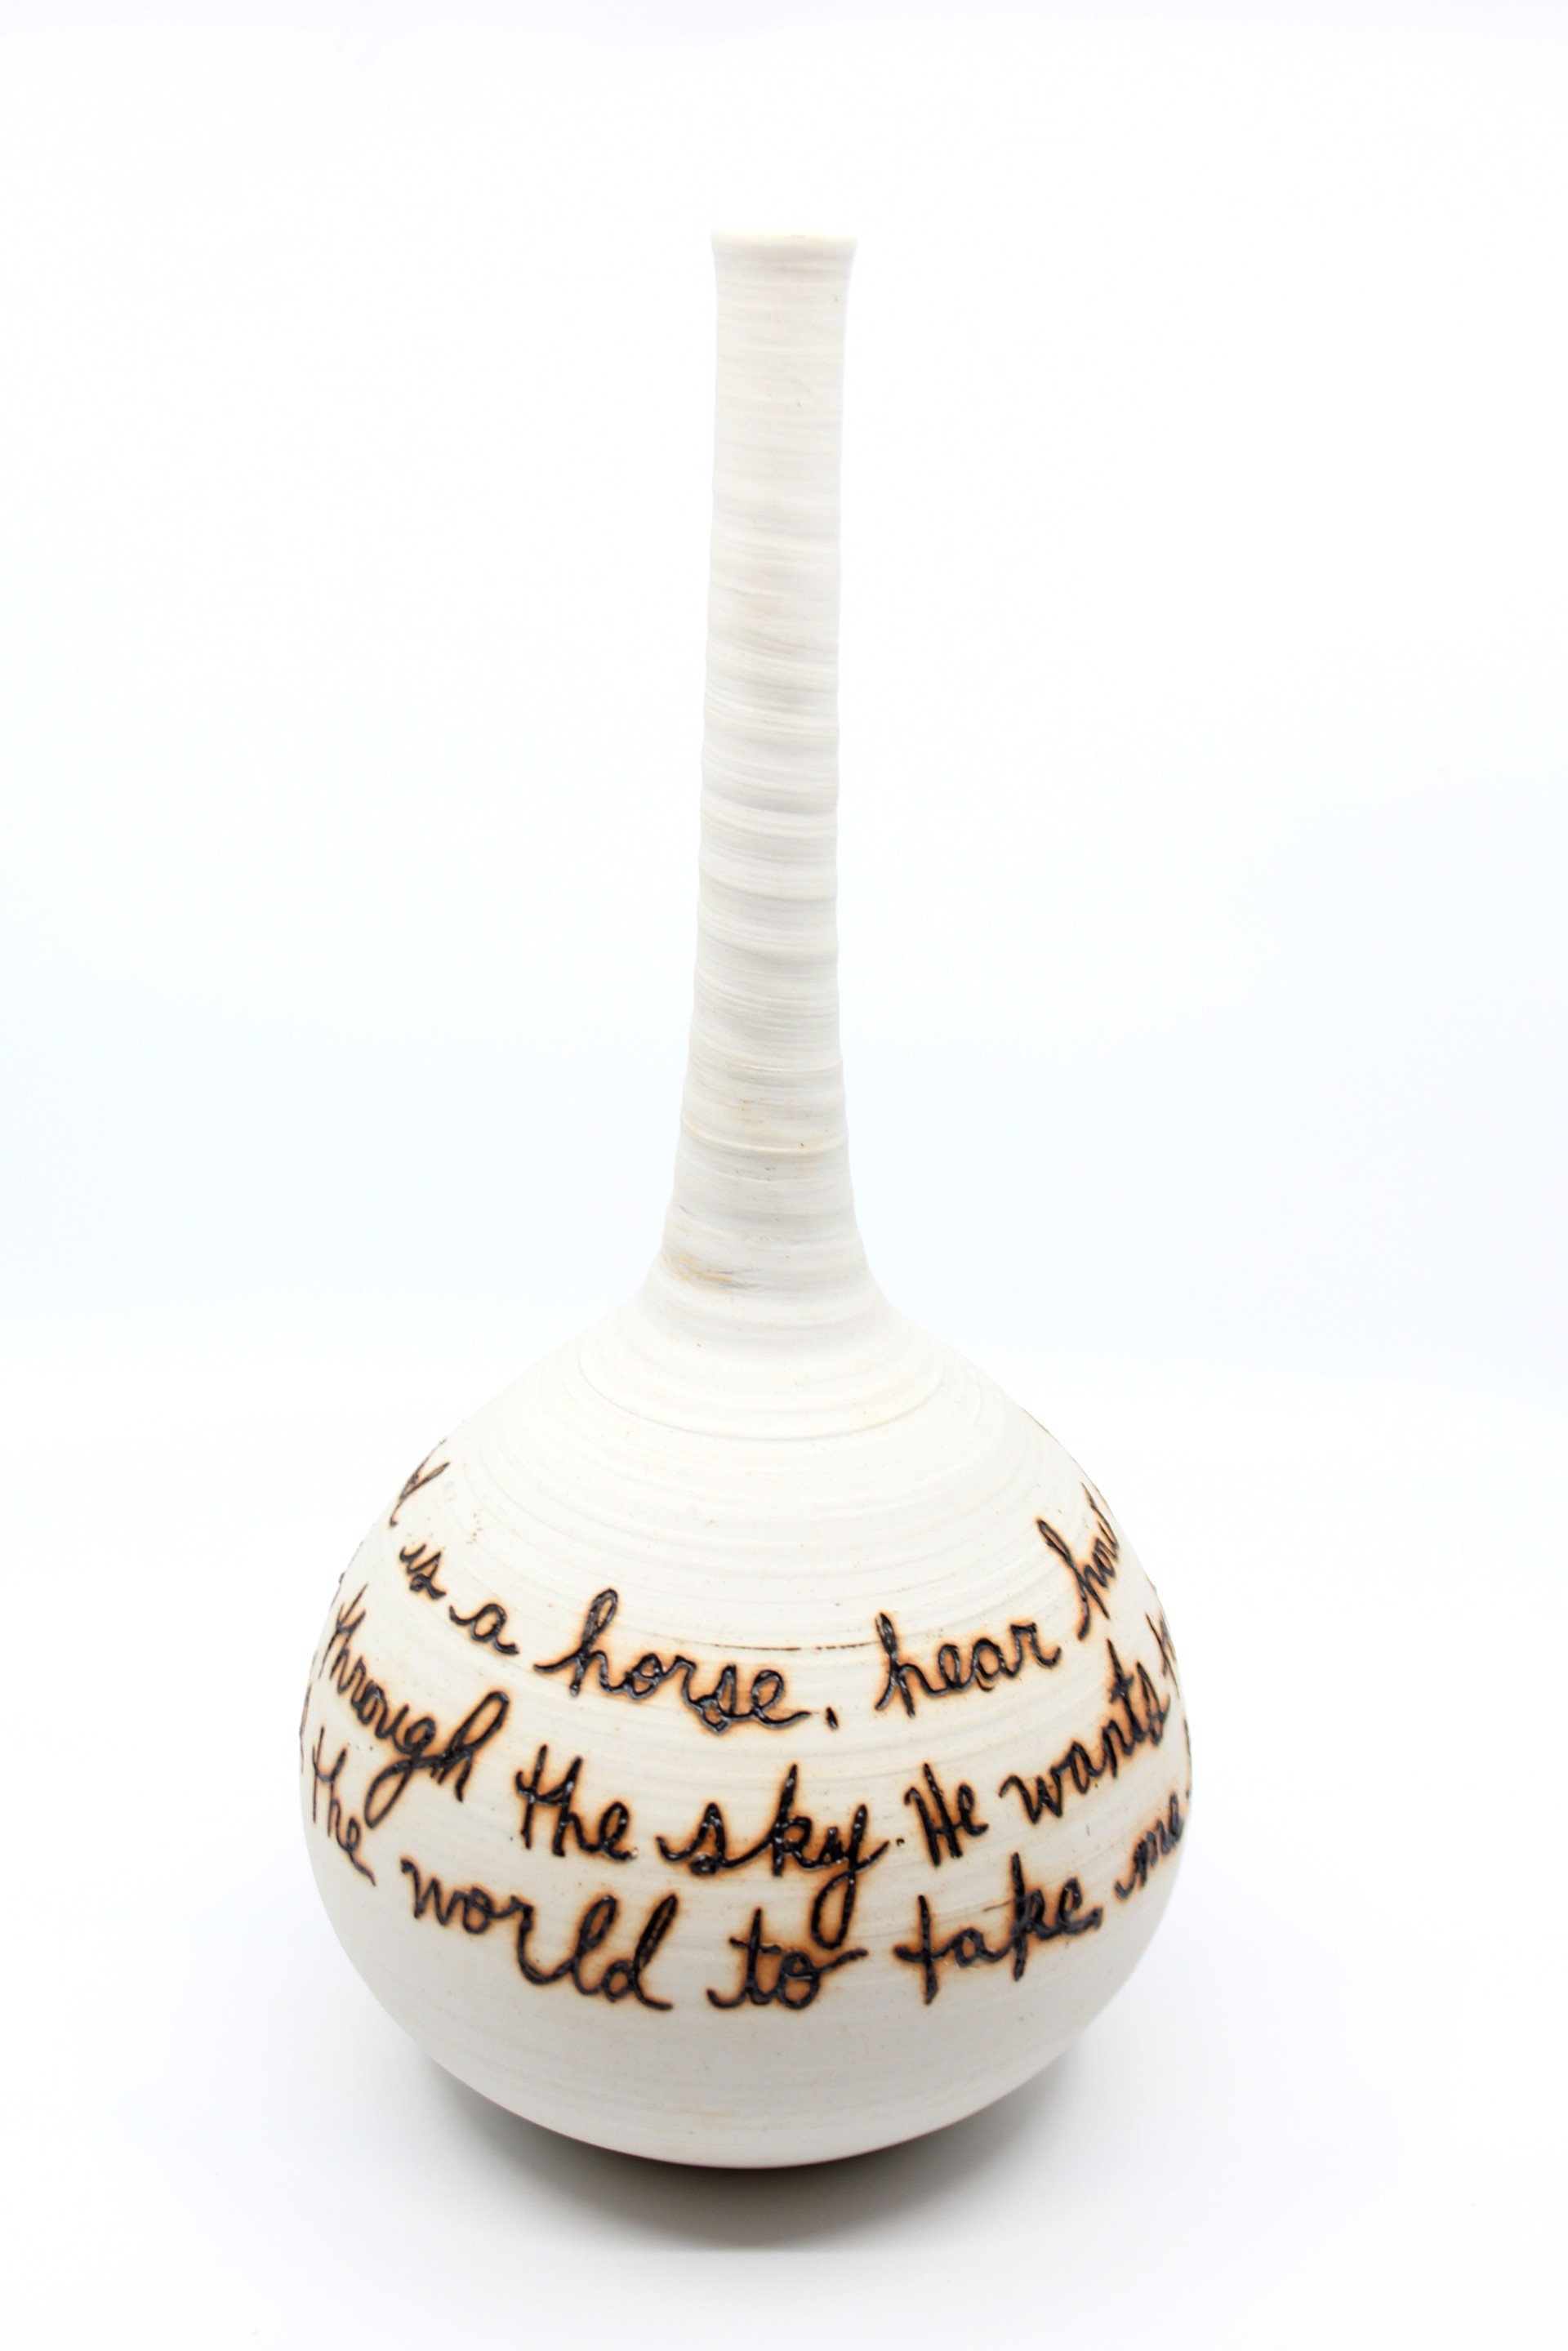 Longneck Writing Vase by Heather Bradley